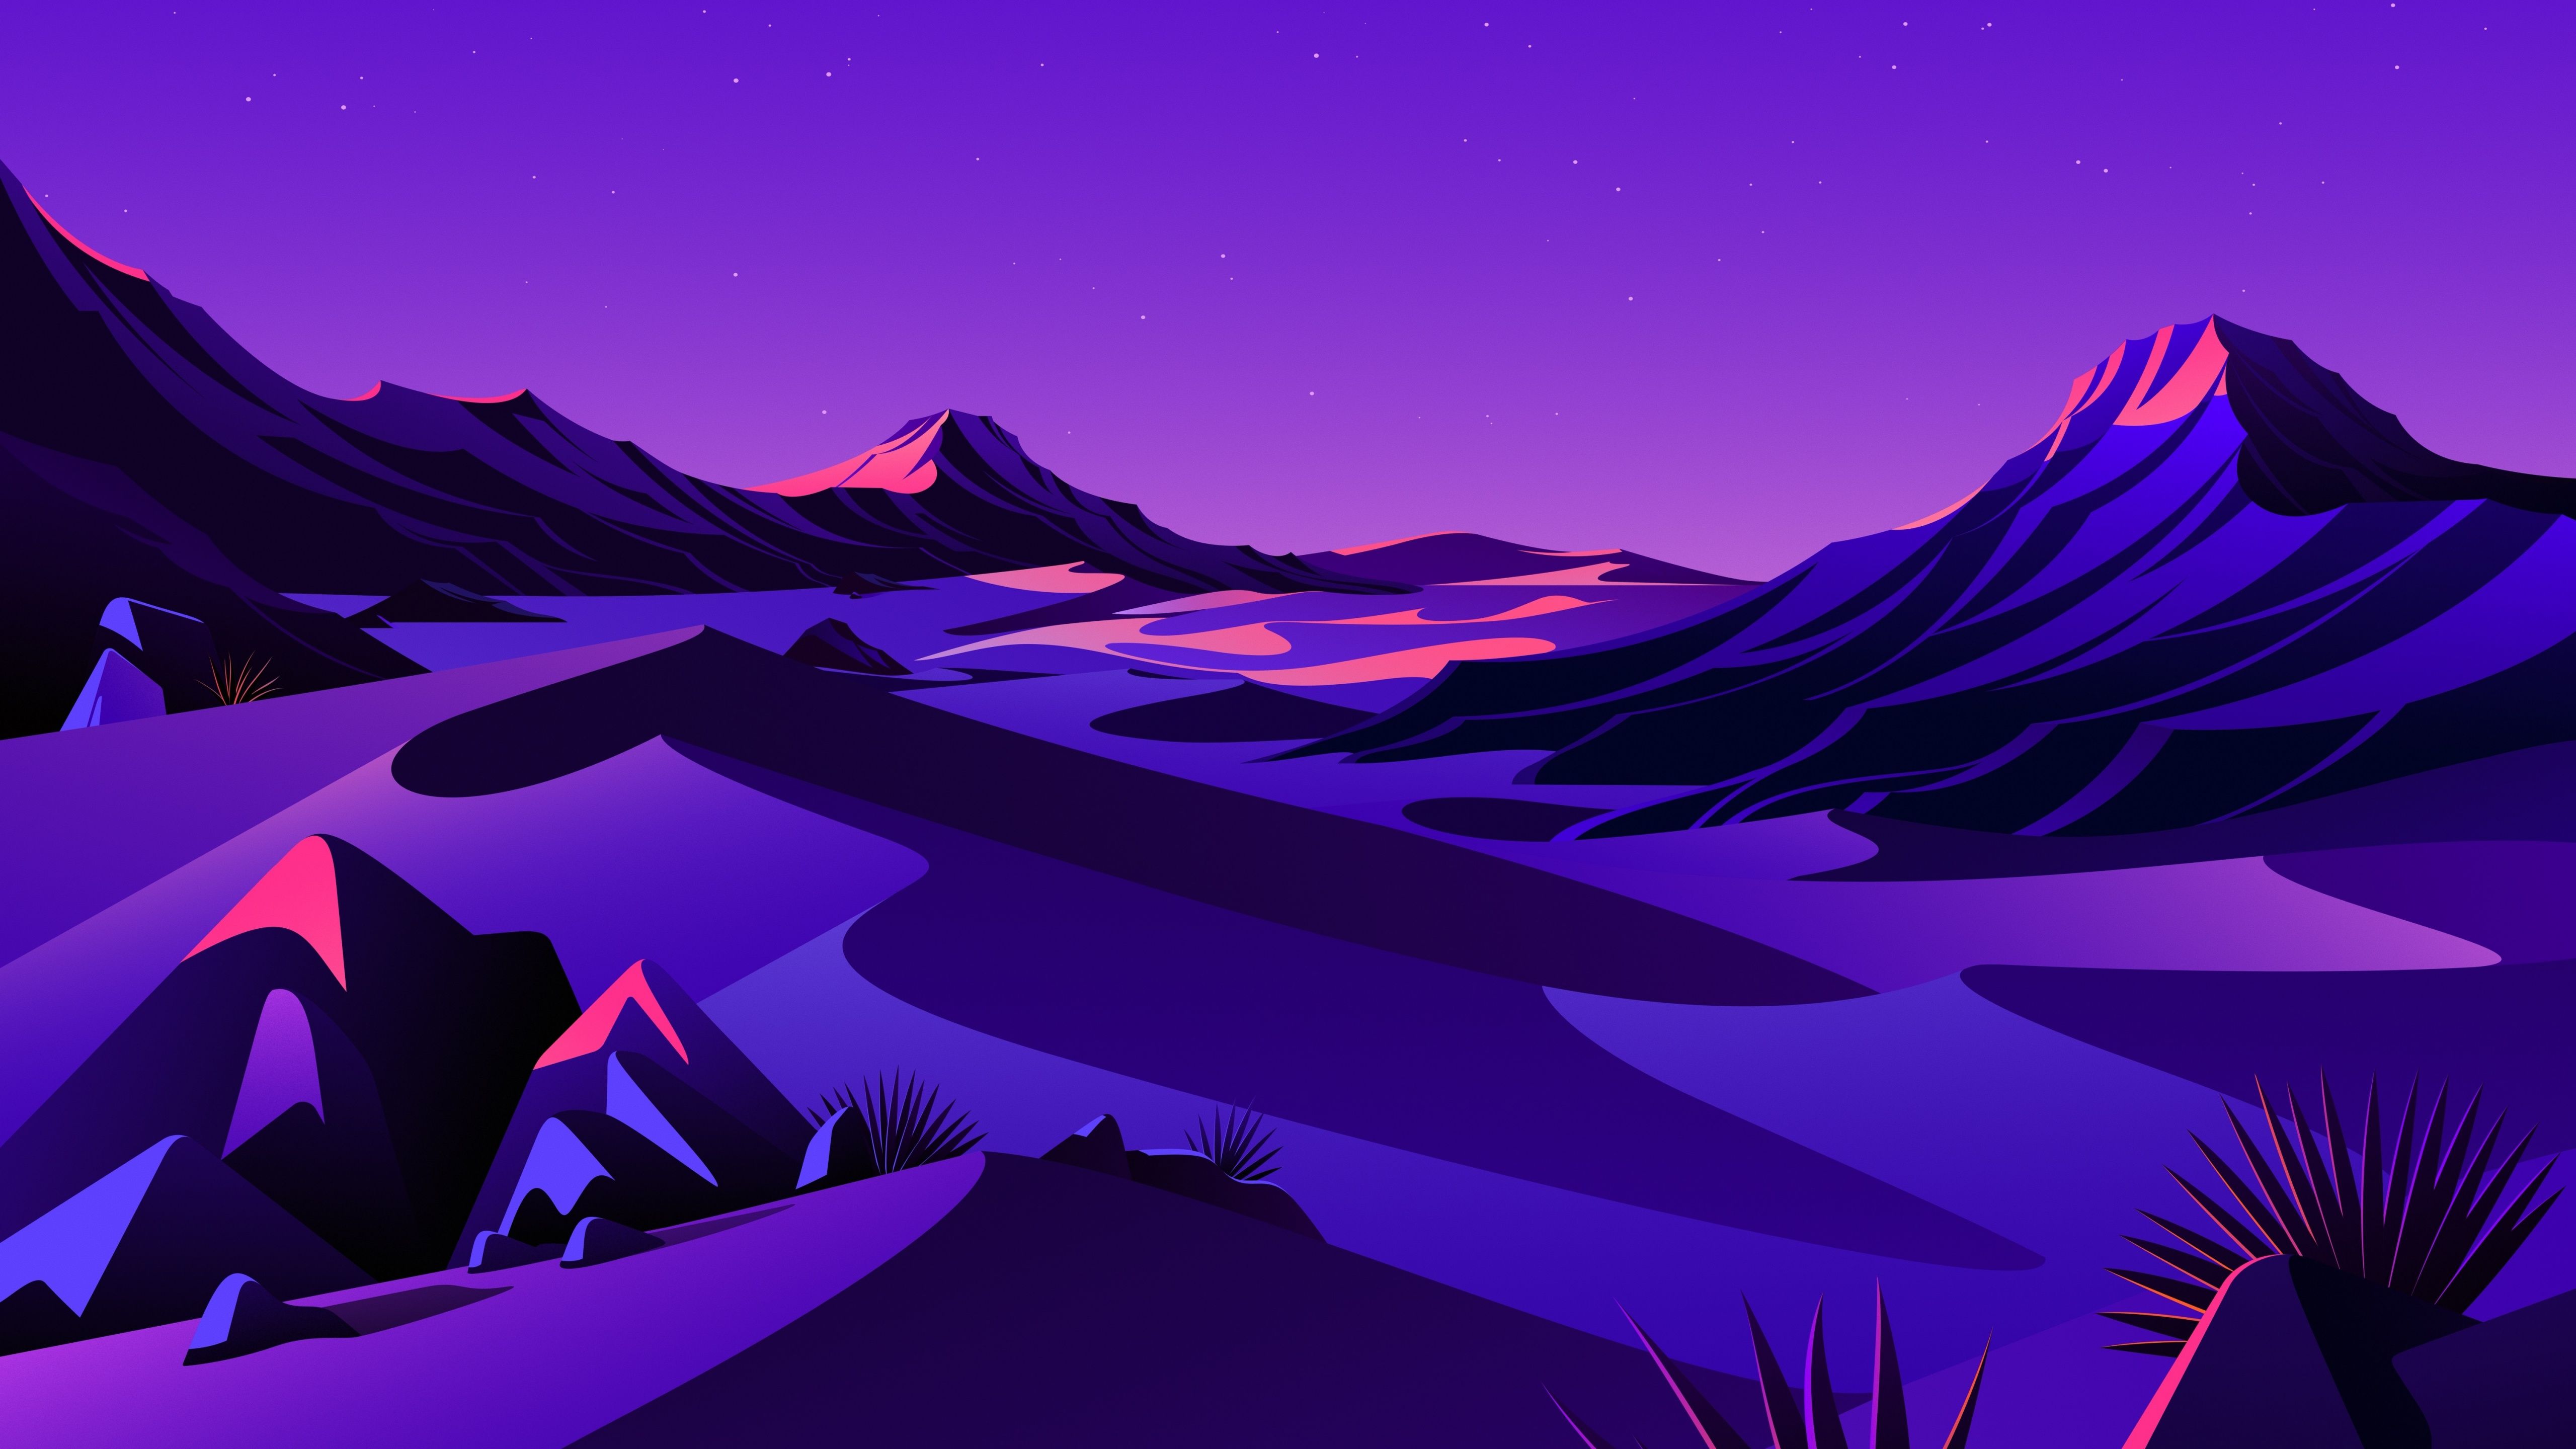 Lake 4K Wallpaper, Mountains, Rocks, Twilight, Sunset, Starry sky, Purple sky, Scenery, Nature